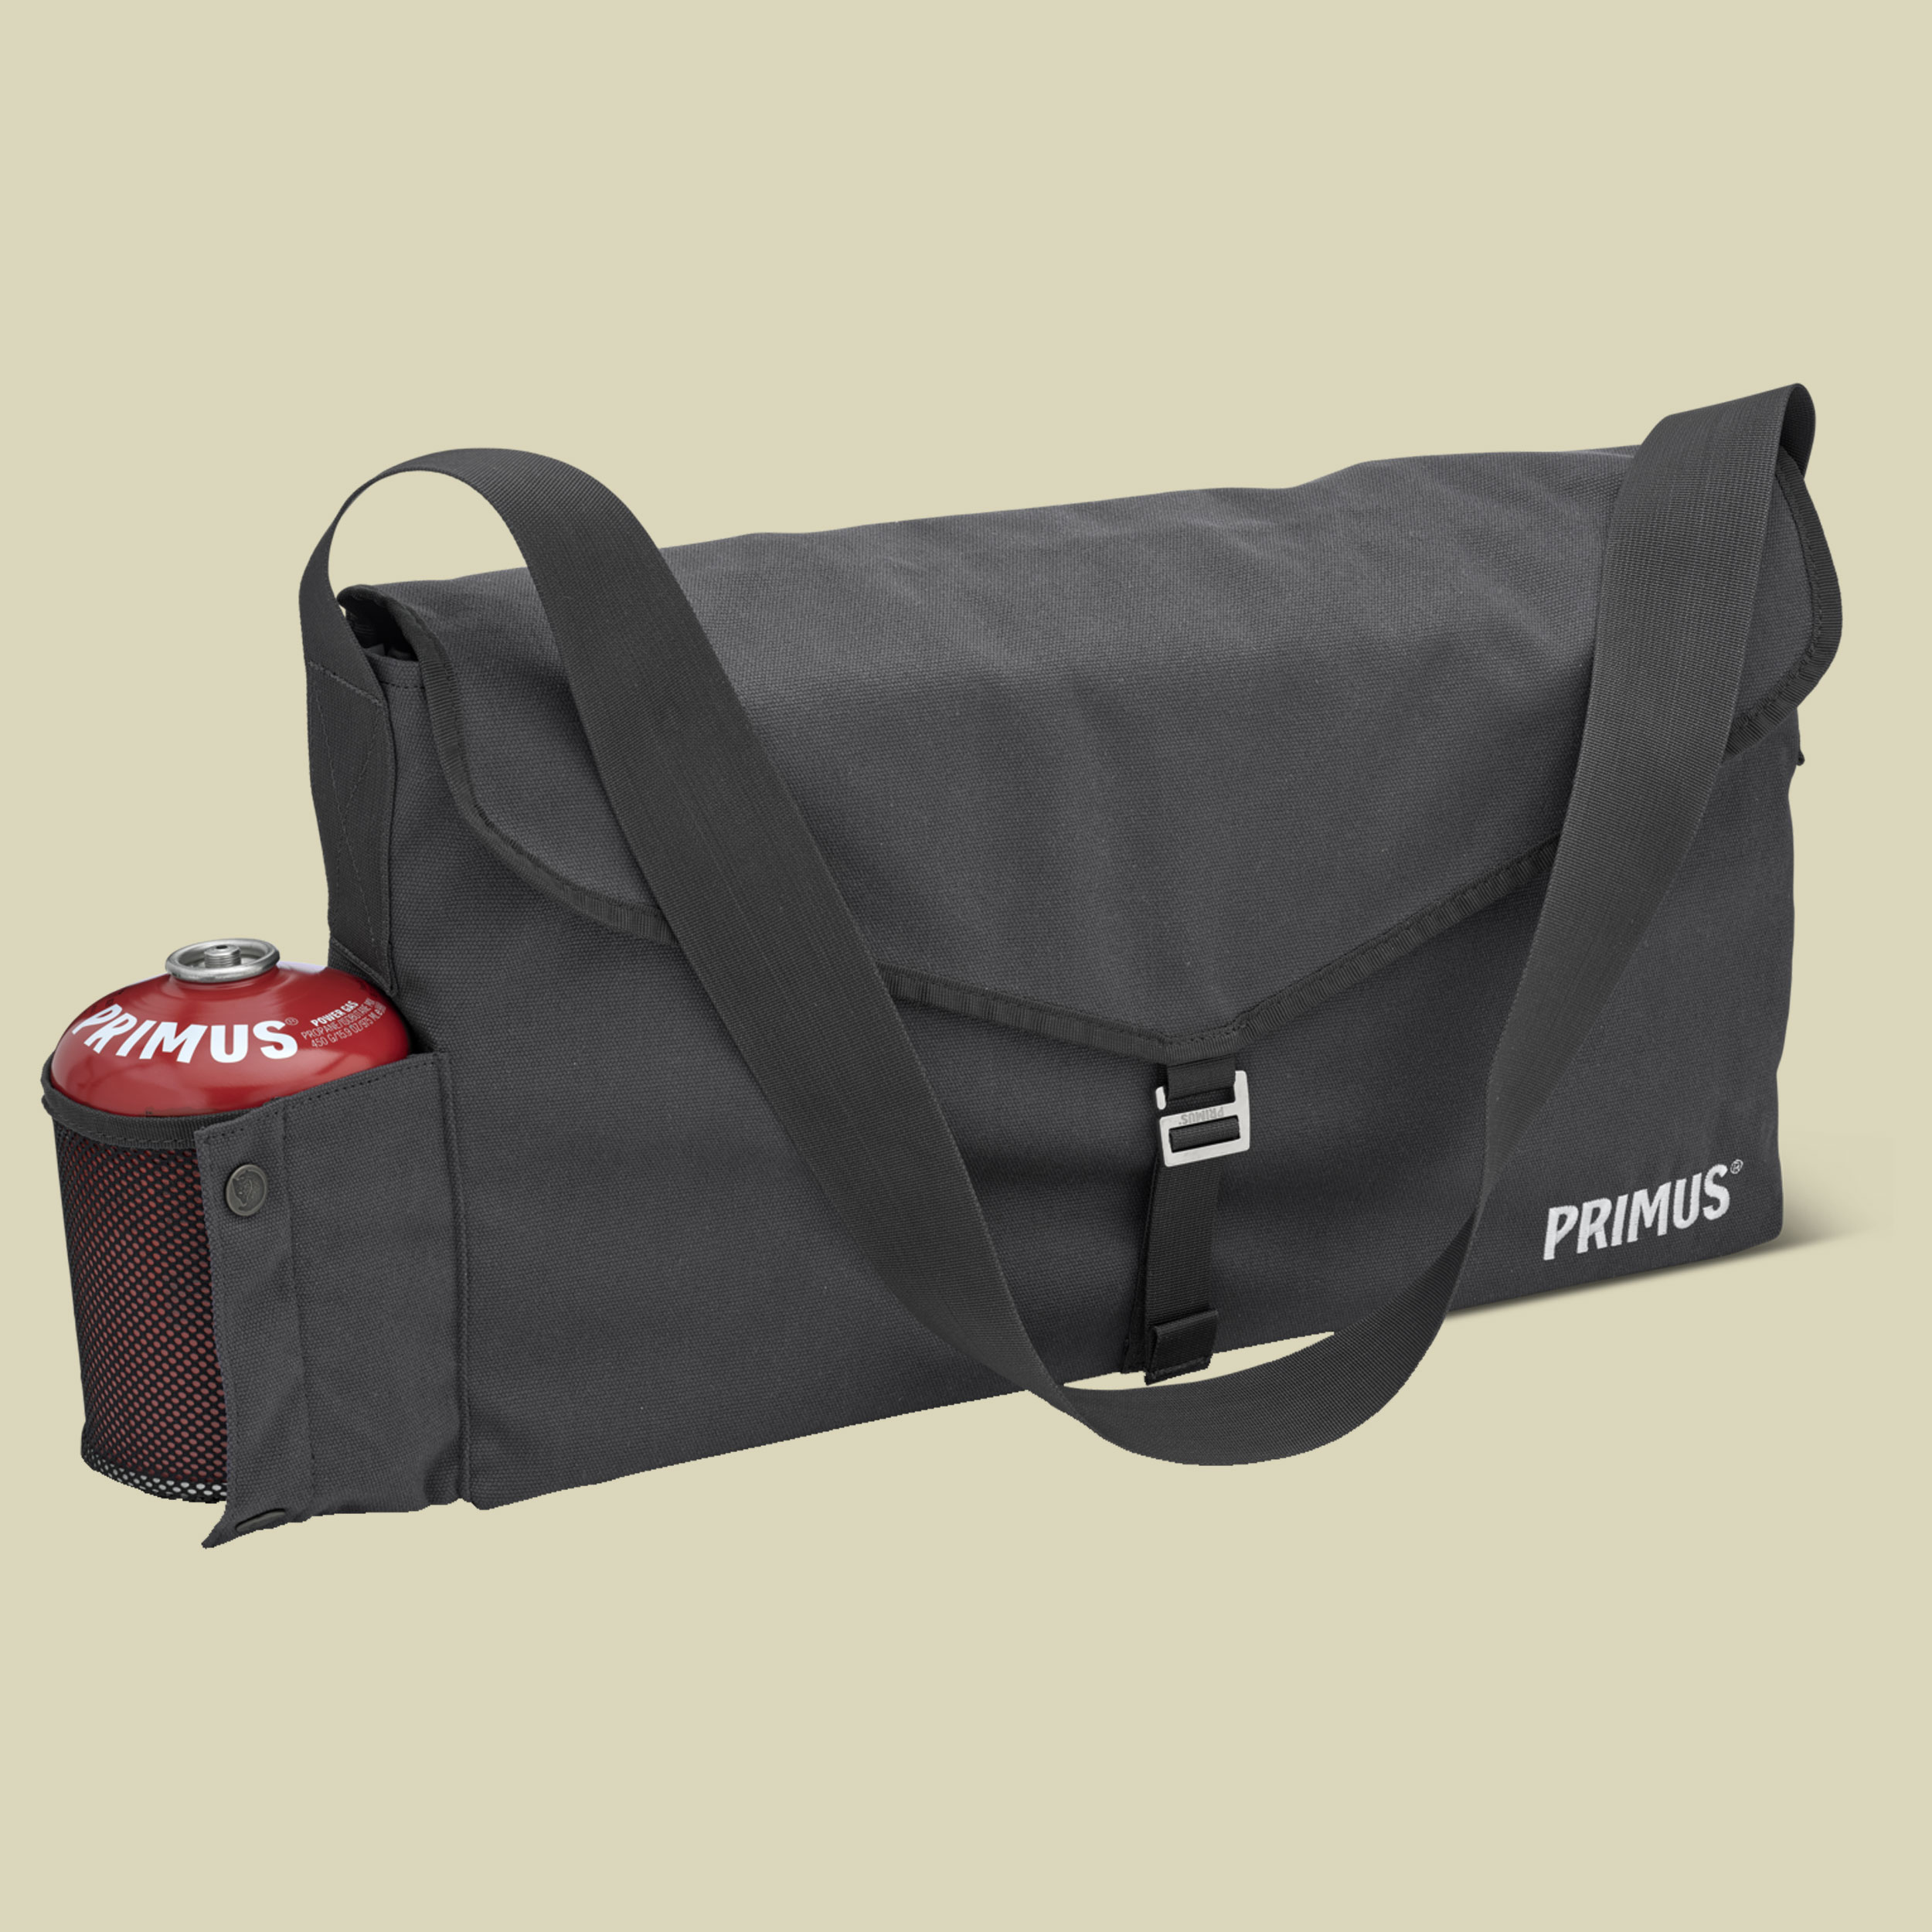 Tatonka Gear Bag 100 - Transporttasche online kaufen